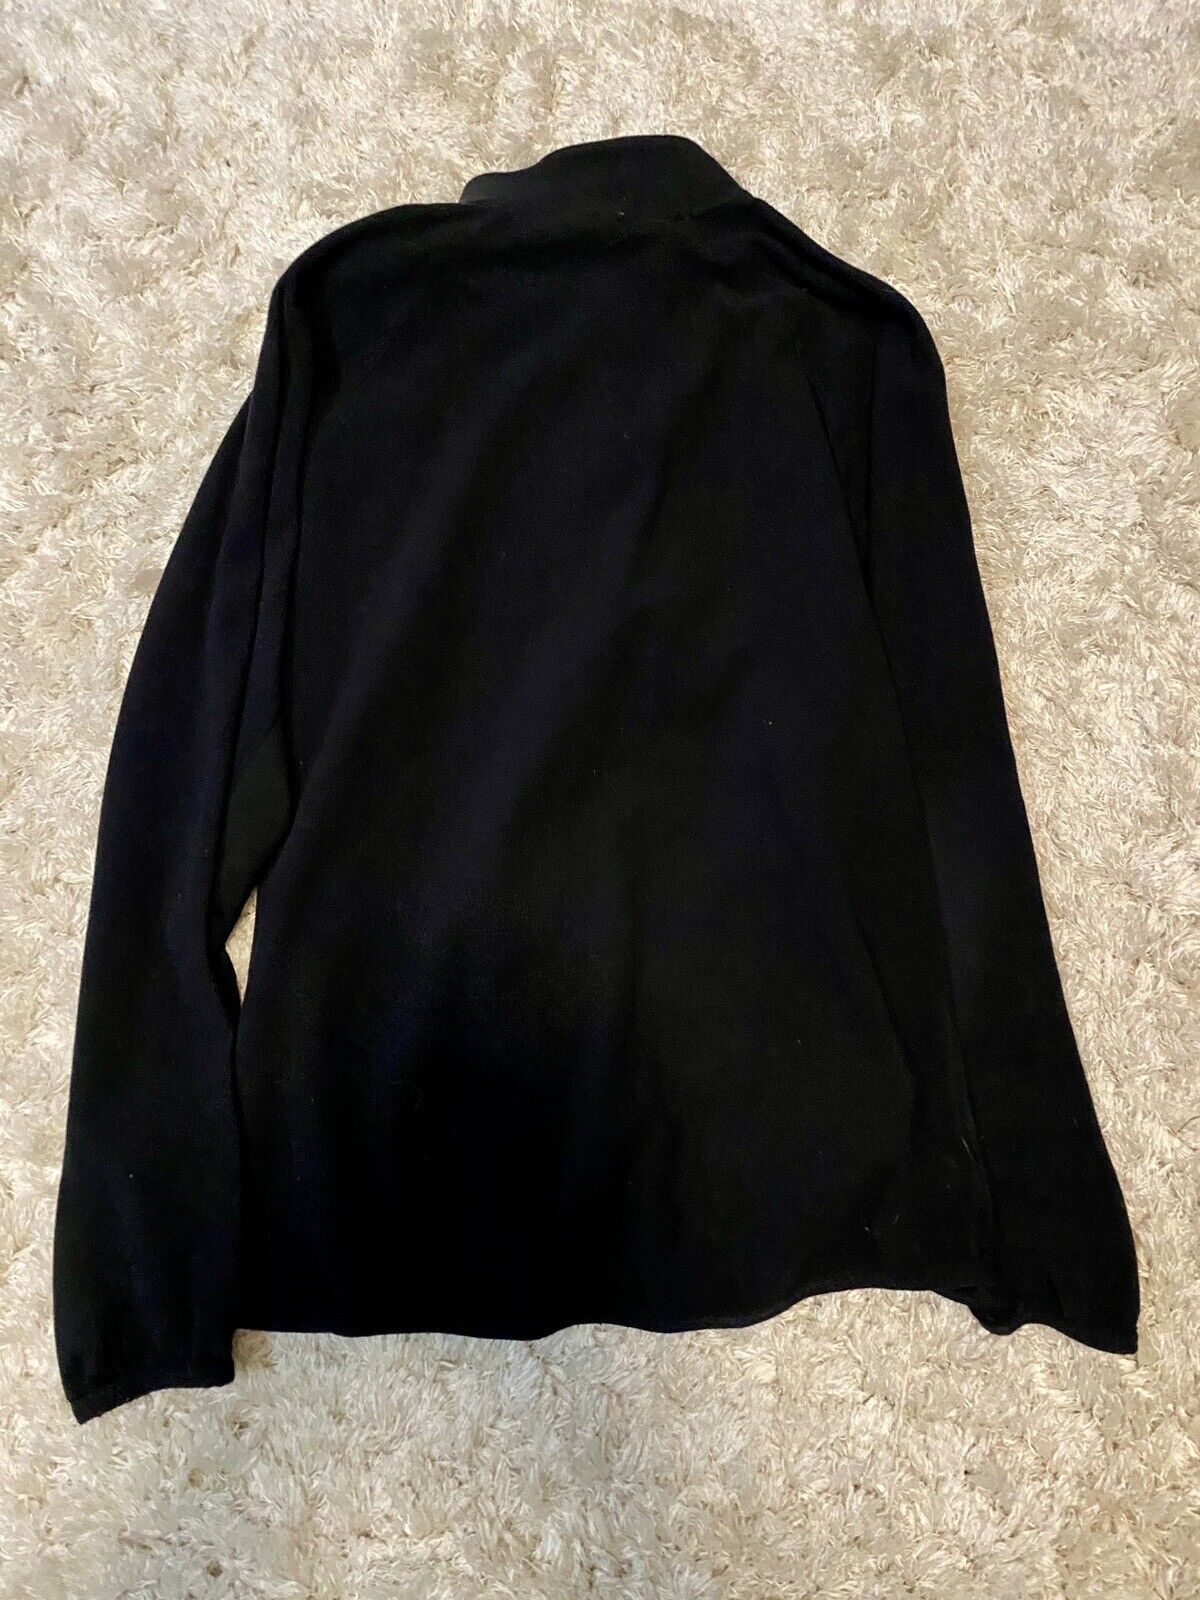 Under Armour Women's Fleece Pull Over Half Zip Long Sleeve Size XL | eBay